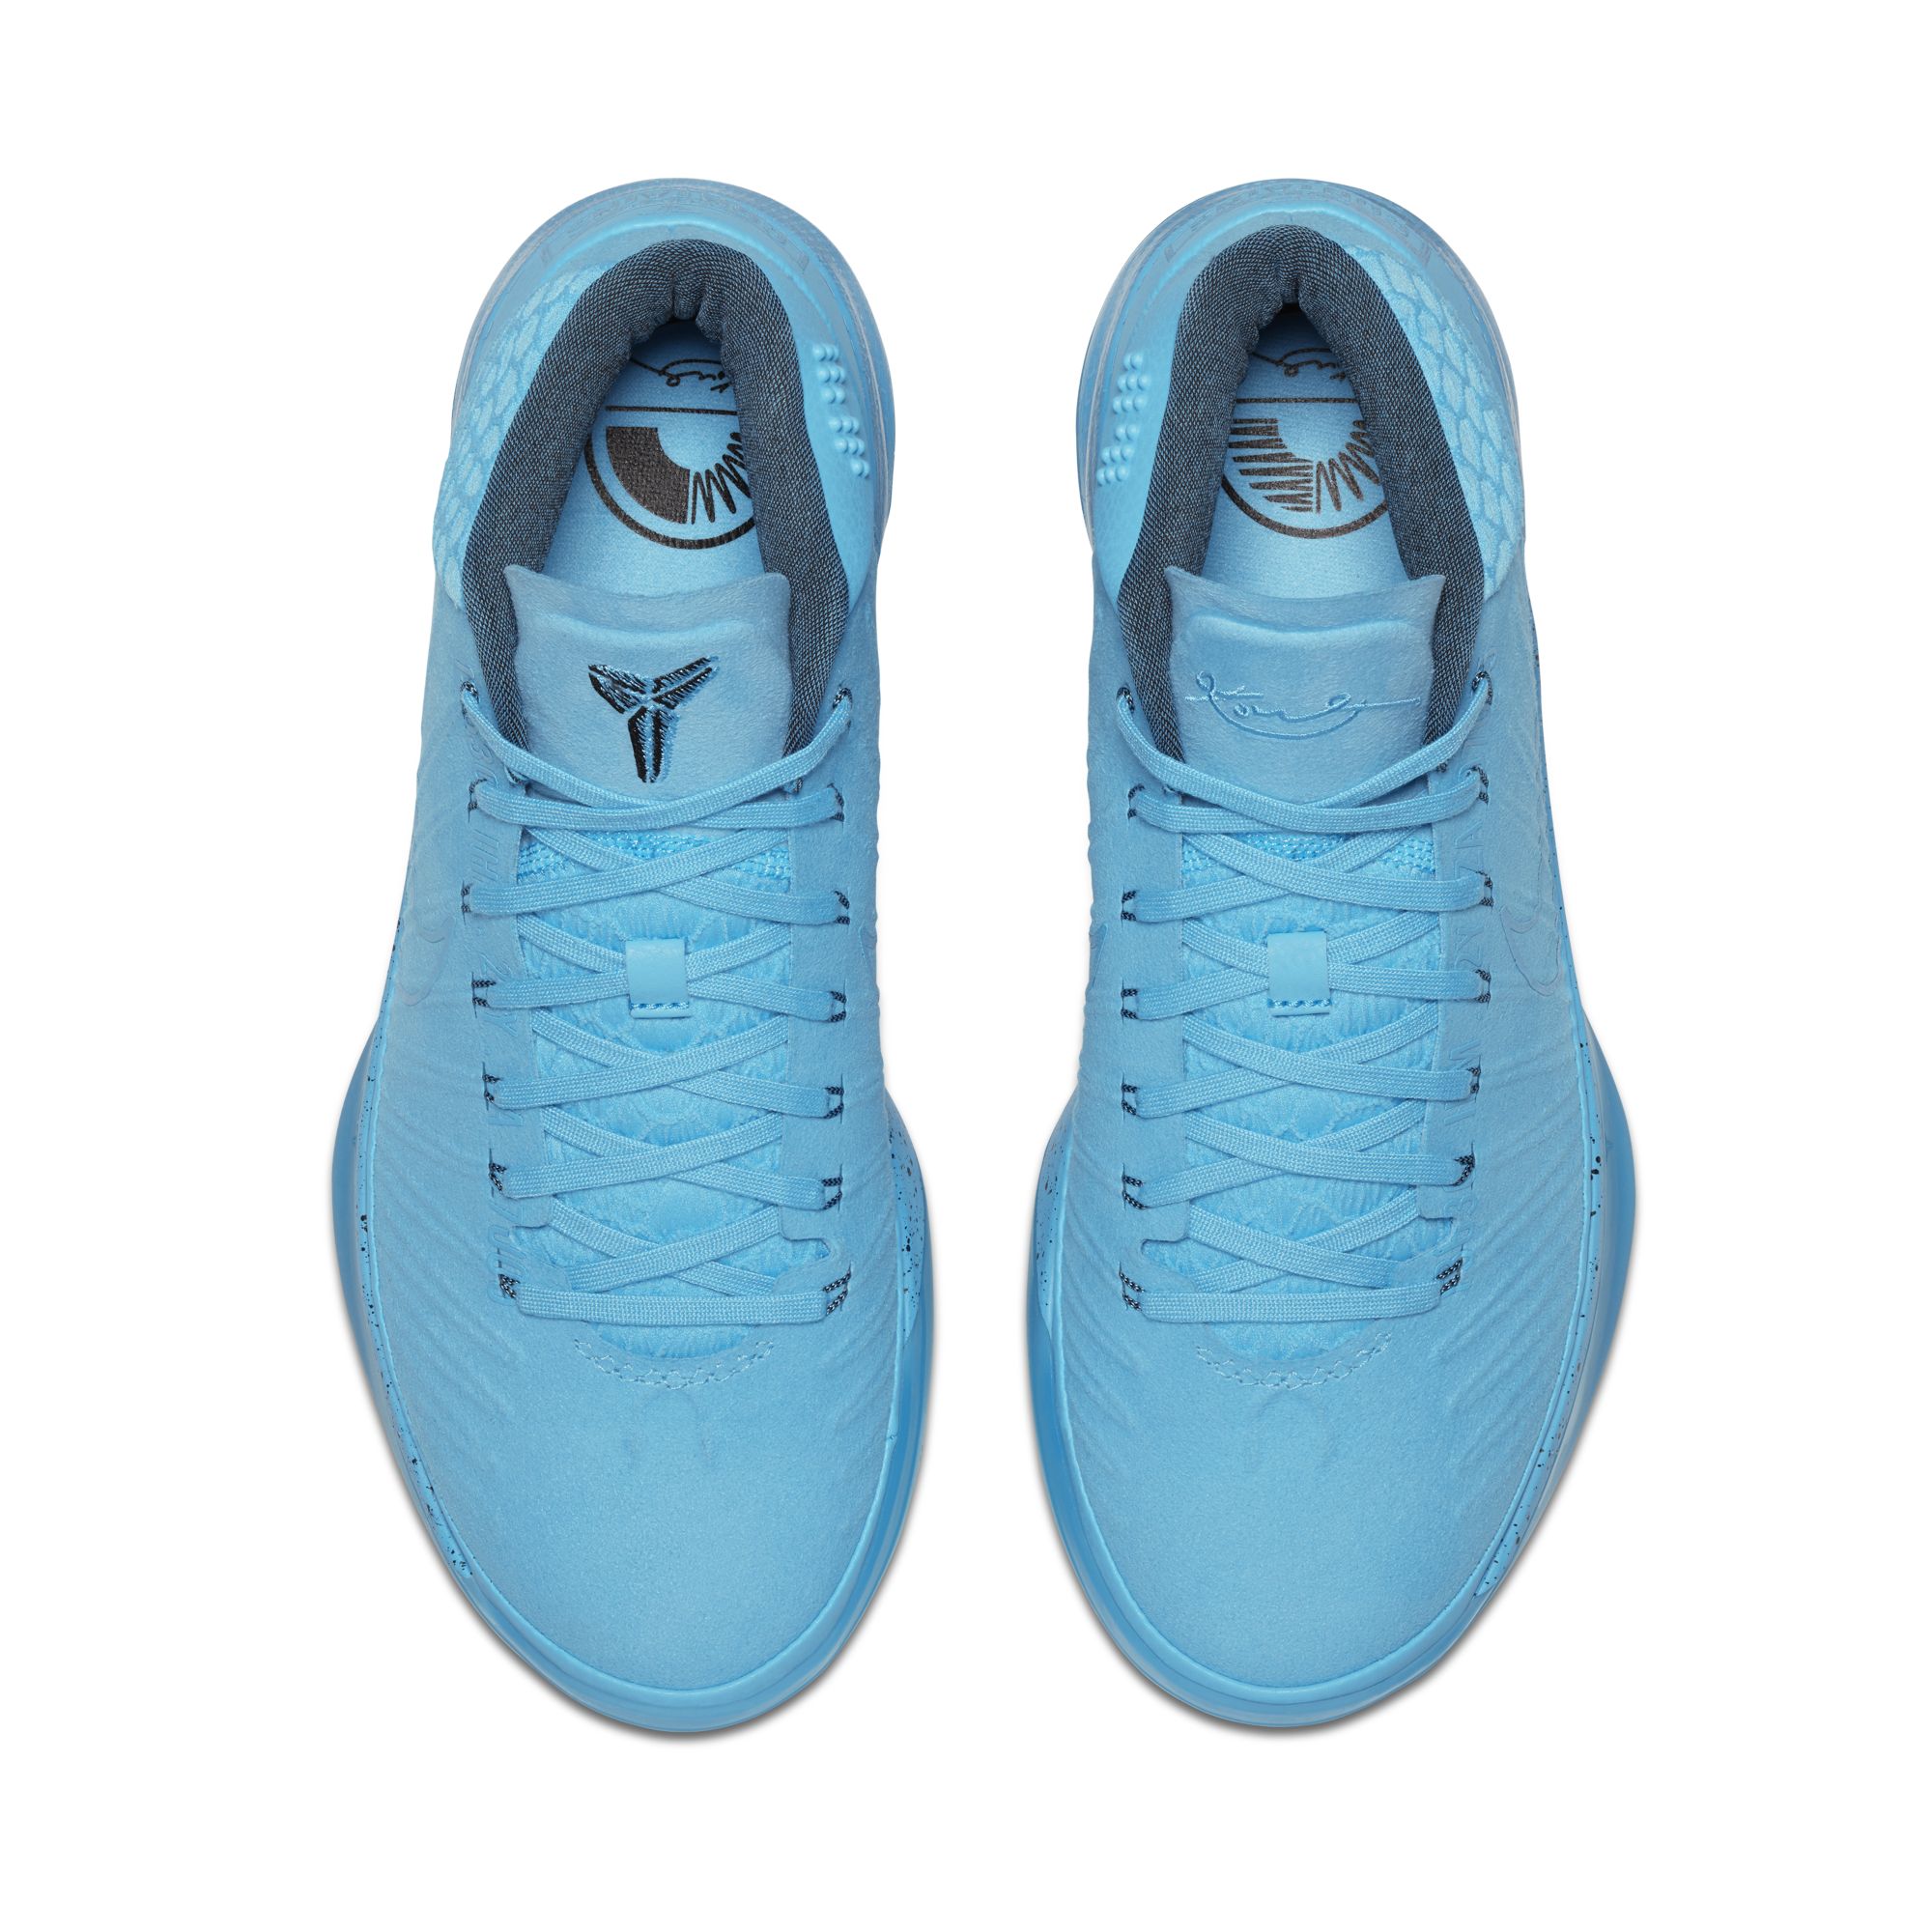 StclaircomoShops Nike Kobe A.D Mid Detached Men Basketball Shoes Blue All 922482 - 400 - boots SAGAN 4878 Czarny Welur